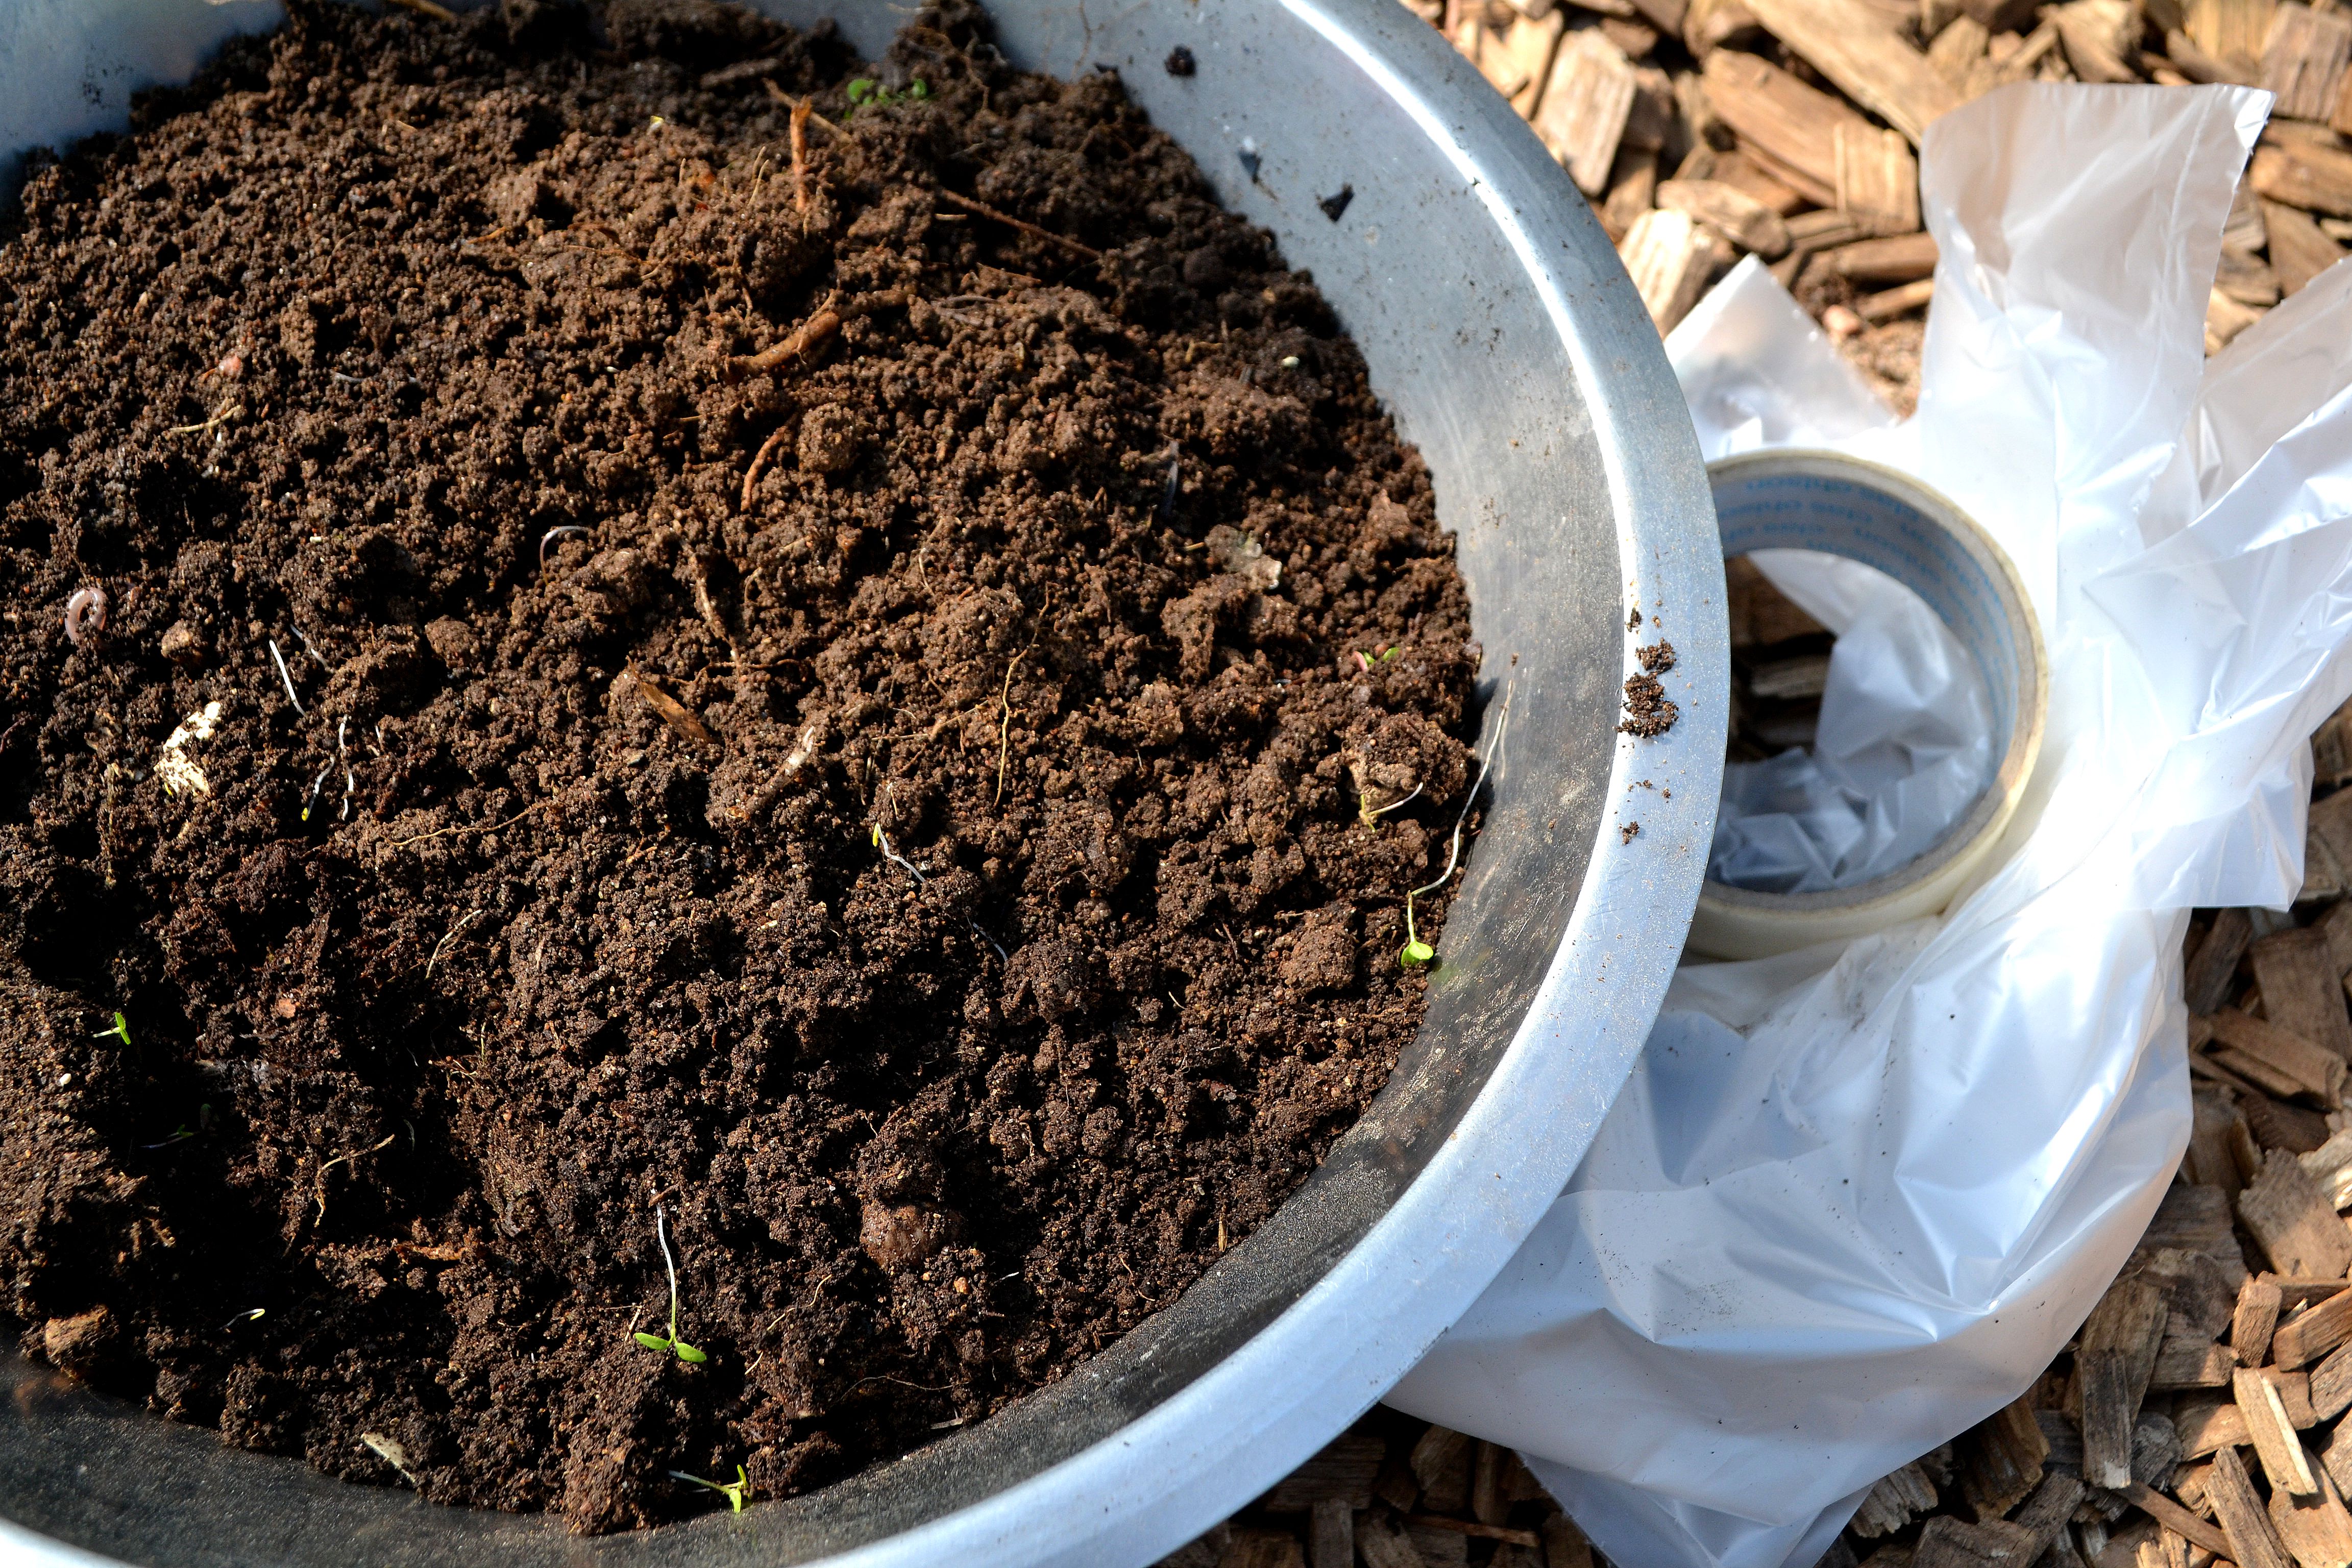 En rostfri skål fylld med jord. Soil analysis, a bowl filled with soil. 